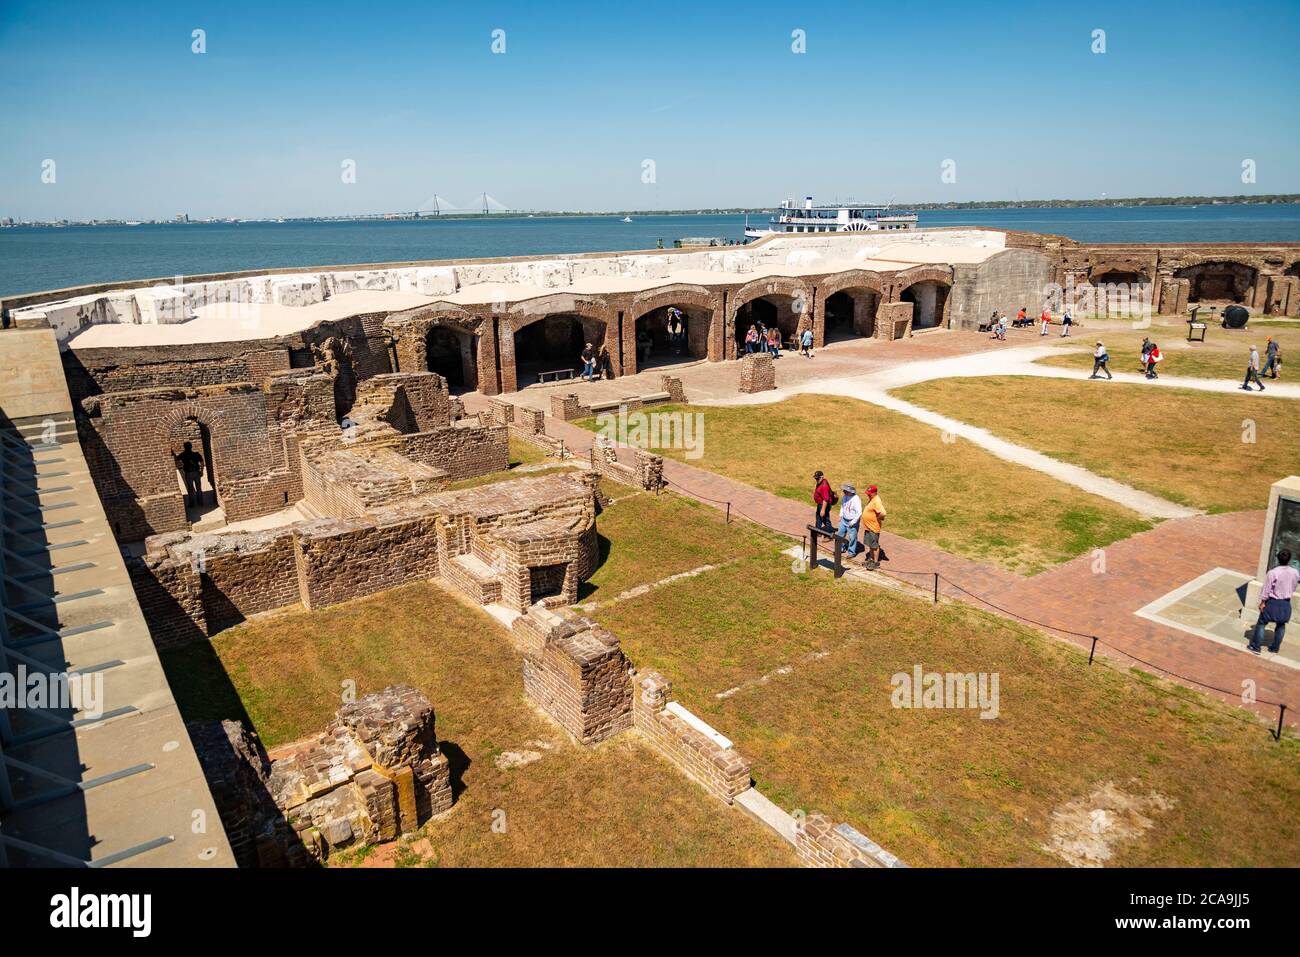 Fort Sumter National Monument in Charleston SC, USA Stockfoto